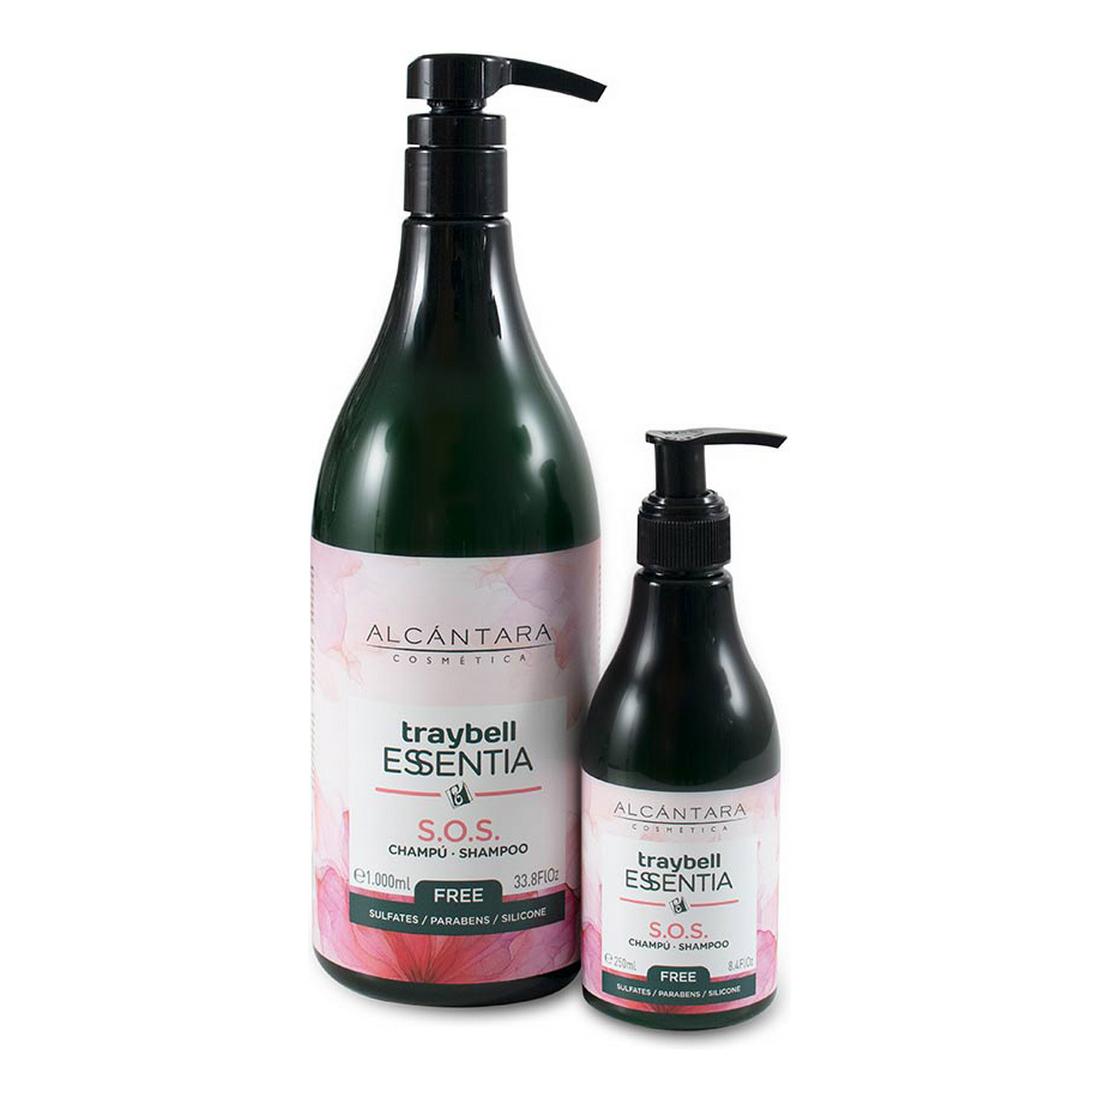 Tiefenreinigendes Shampoo Traybell Essentia S.O.S. Alcantara (1000 ml)